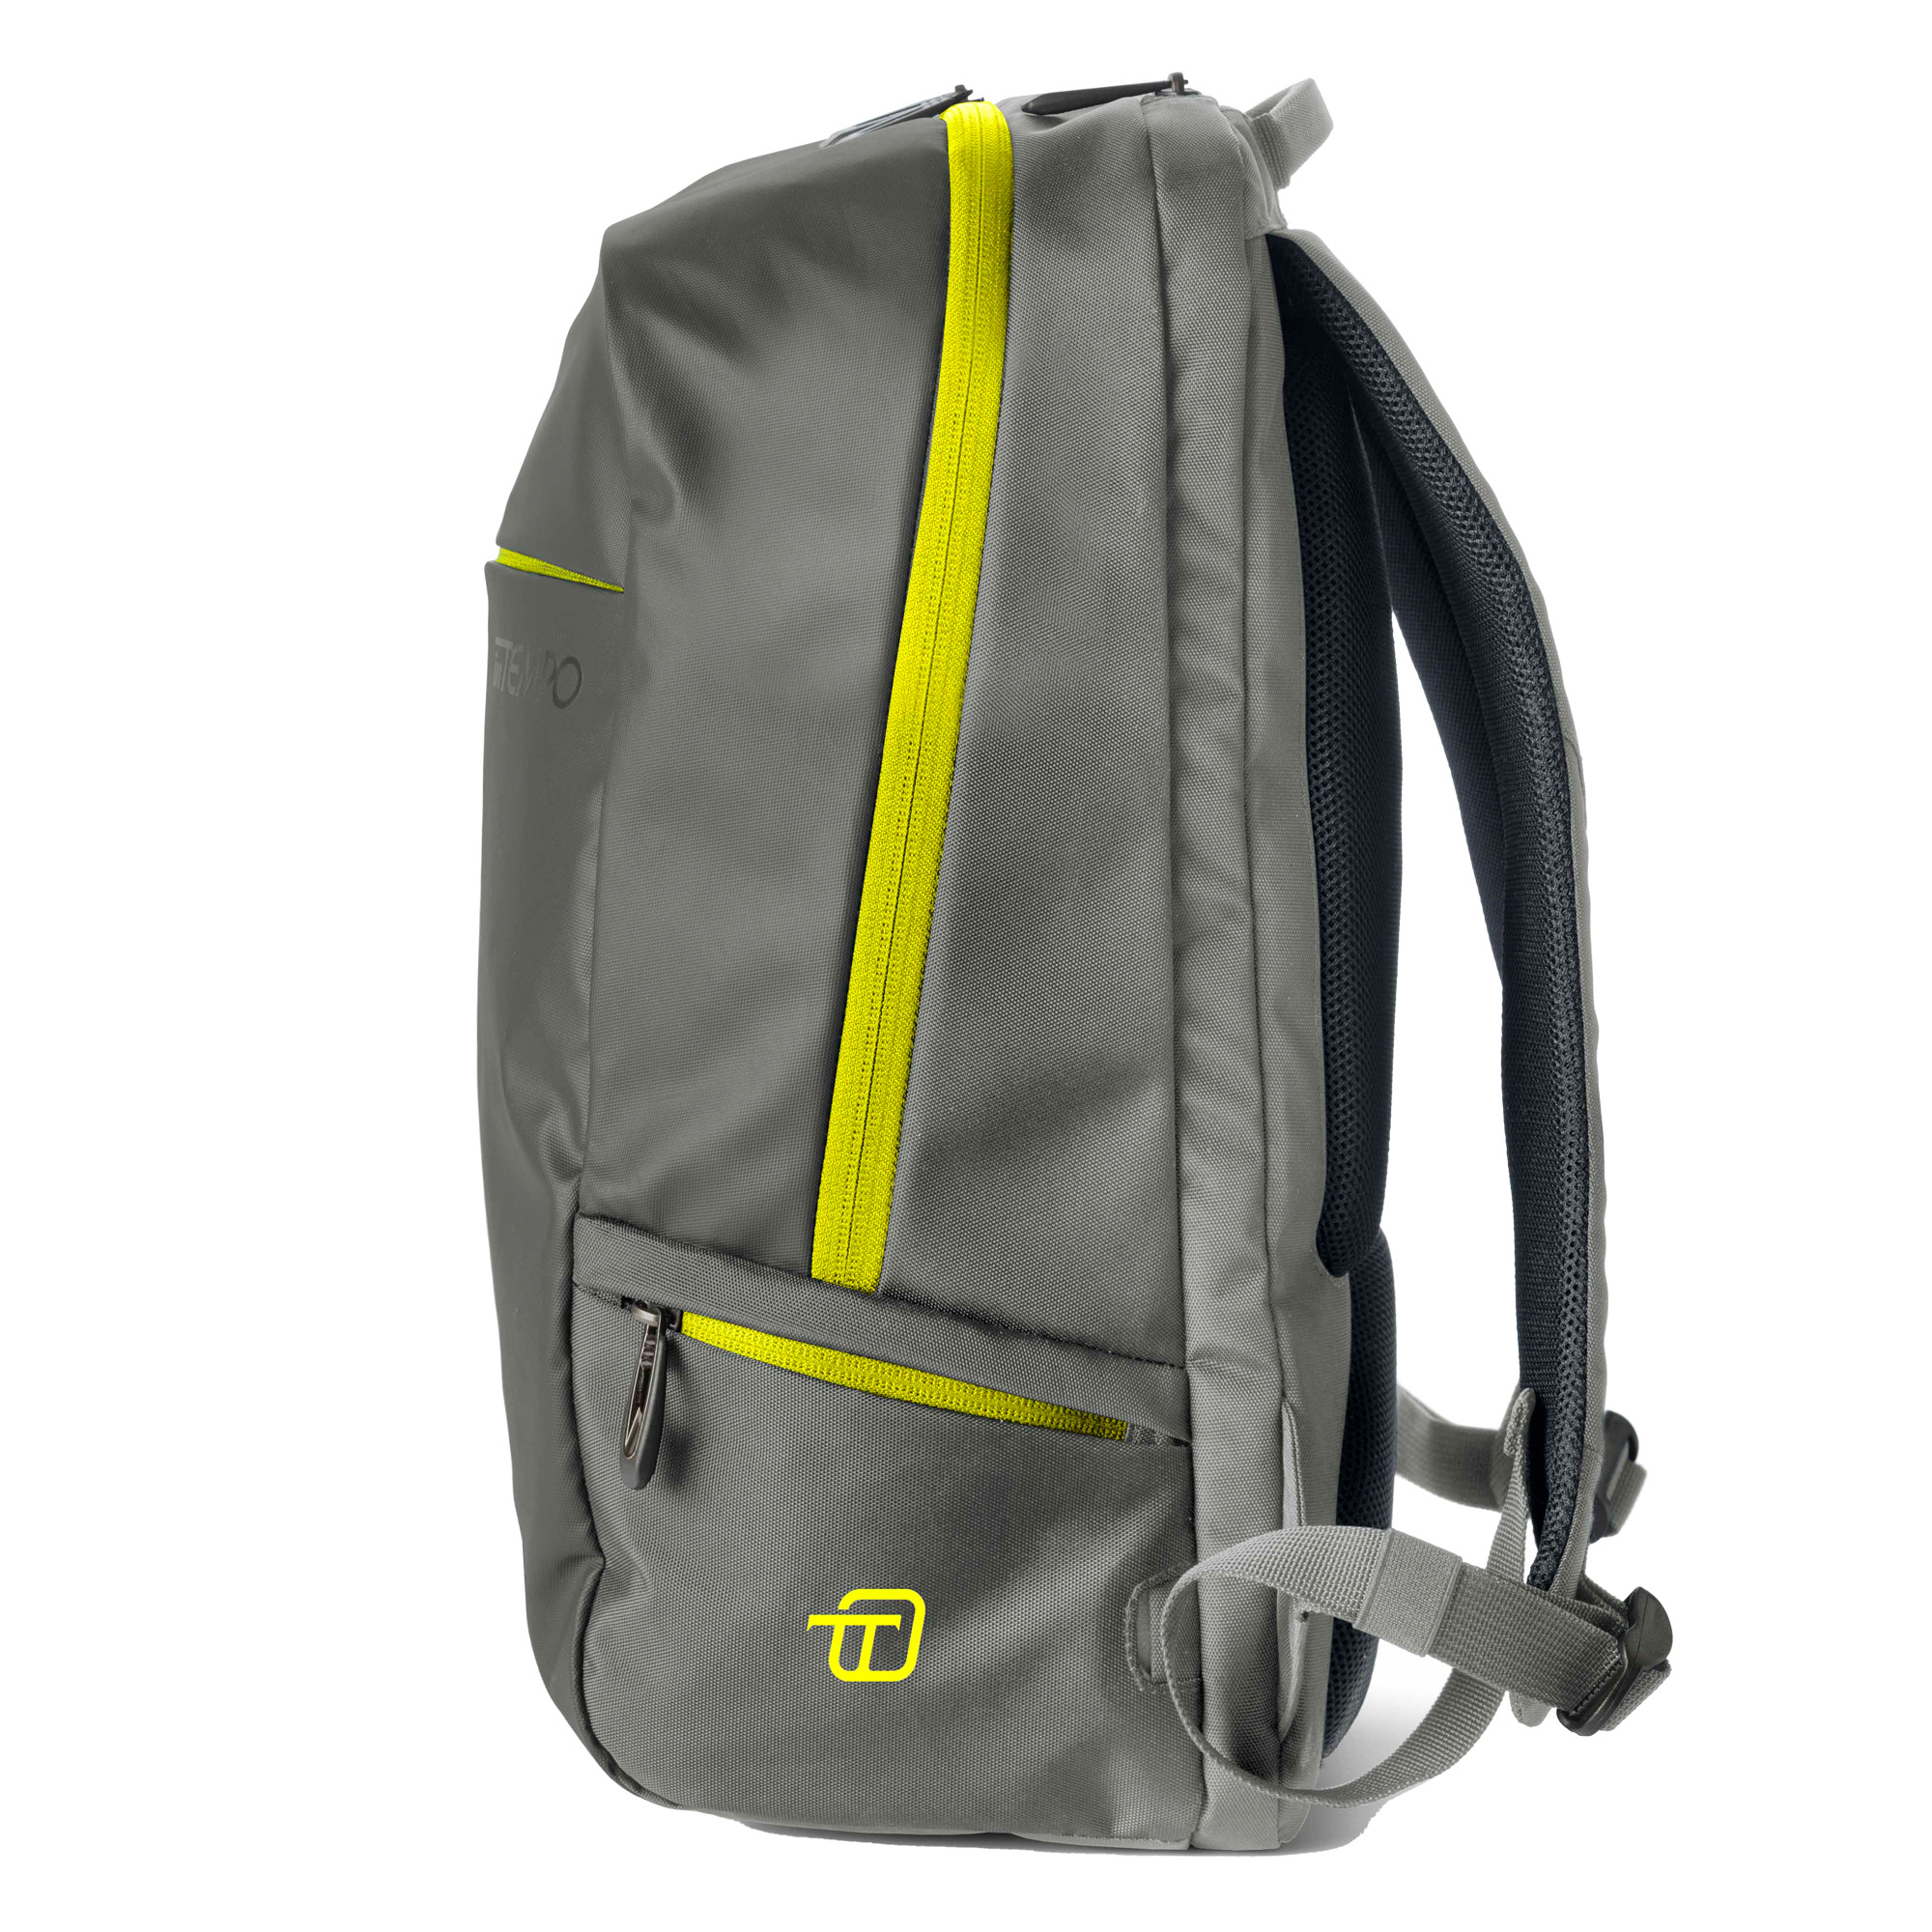 Zaino backpack Blackout - 28 x 46 x 22 cm - grigio/giallo - InTempo